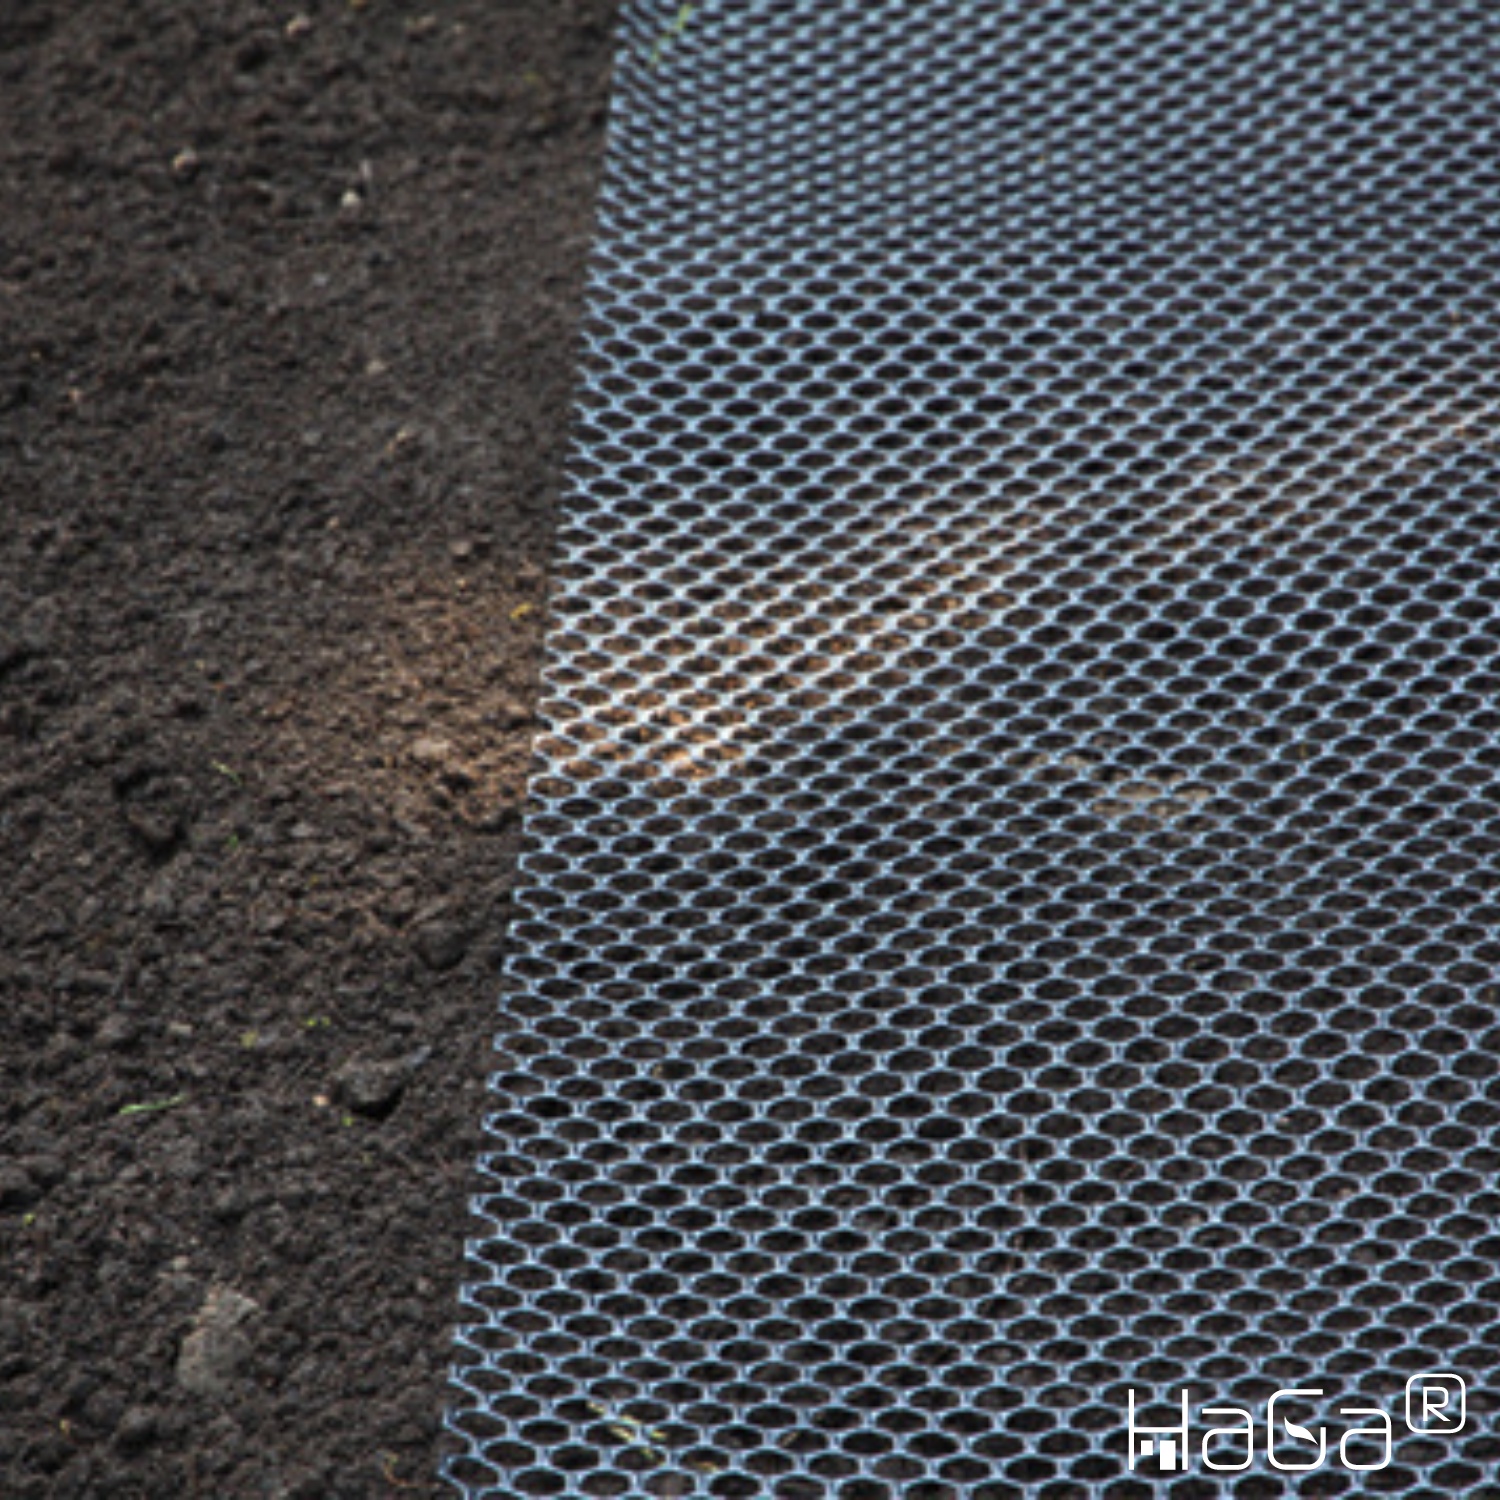 MAULWURFGITTER in 2 metri di larghezza con maglia da 7 mm (merce da cantiere) Barriera anti talpa